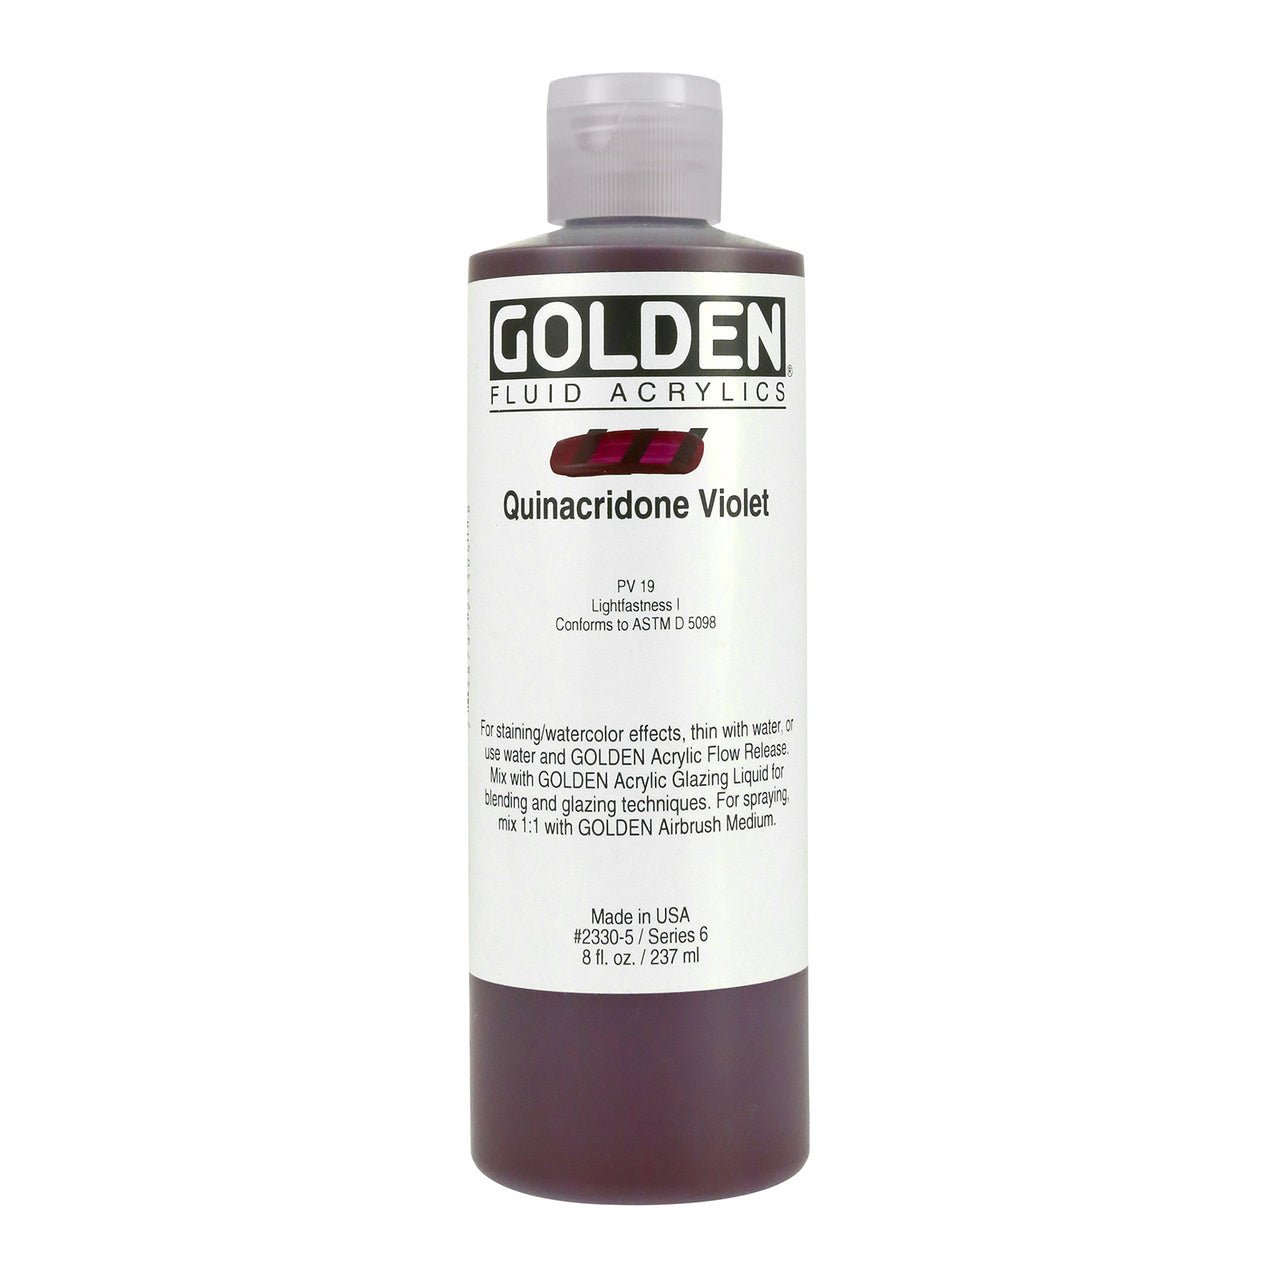 Golden Fluid Acrylic Quinacridone Violet 8 oz - merriartist.com